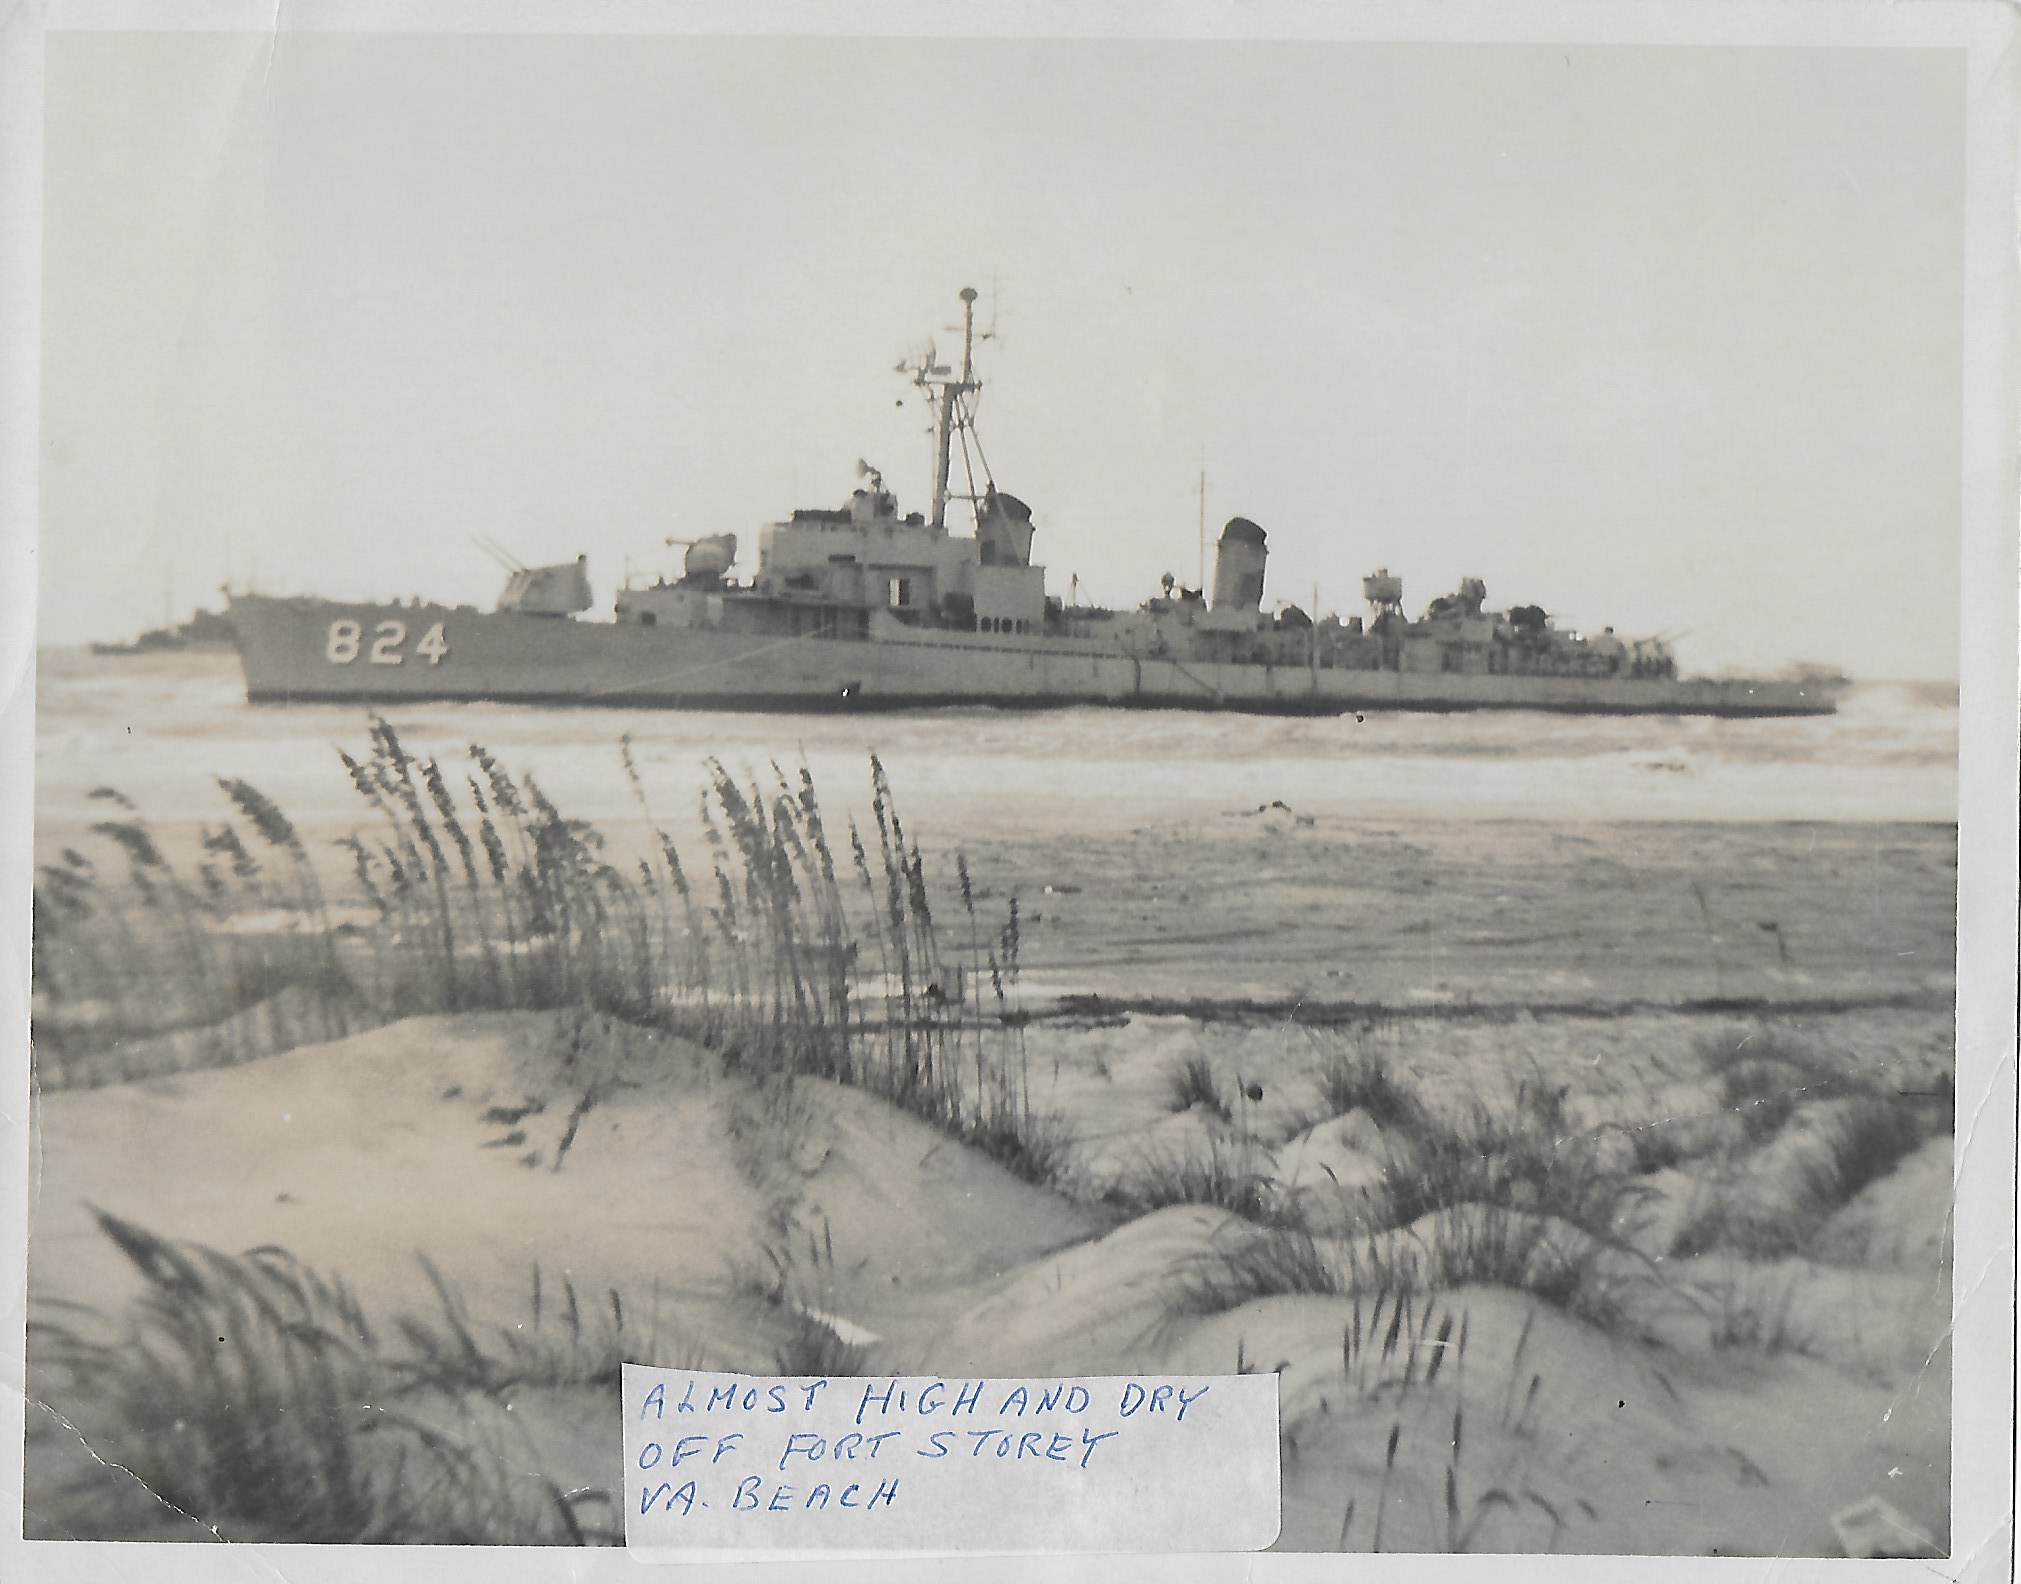 USS Basilone Grounded at Fort Story, VA